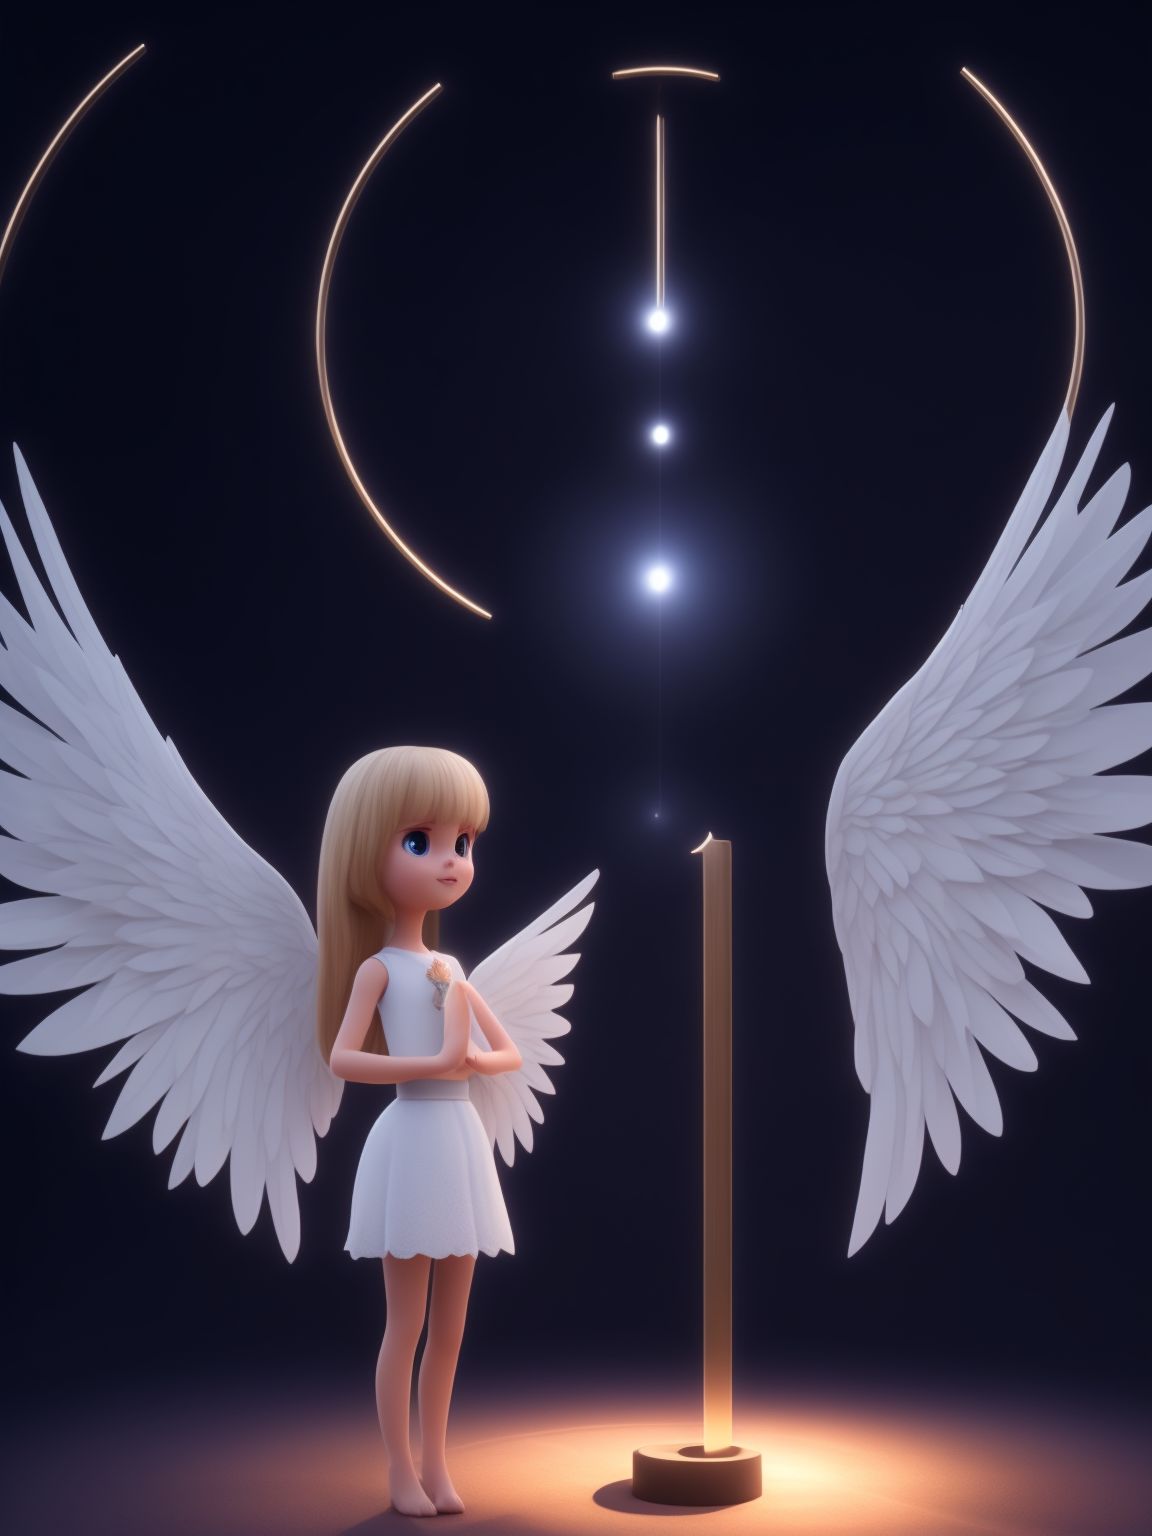 beautiful cartoon angel